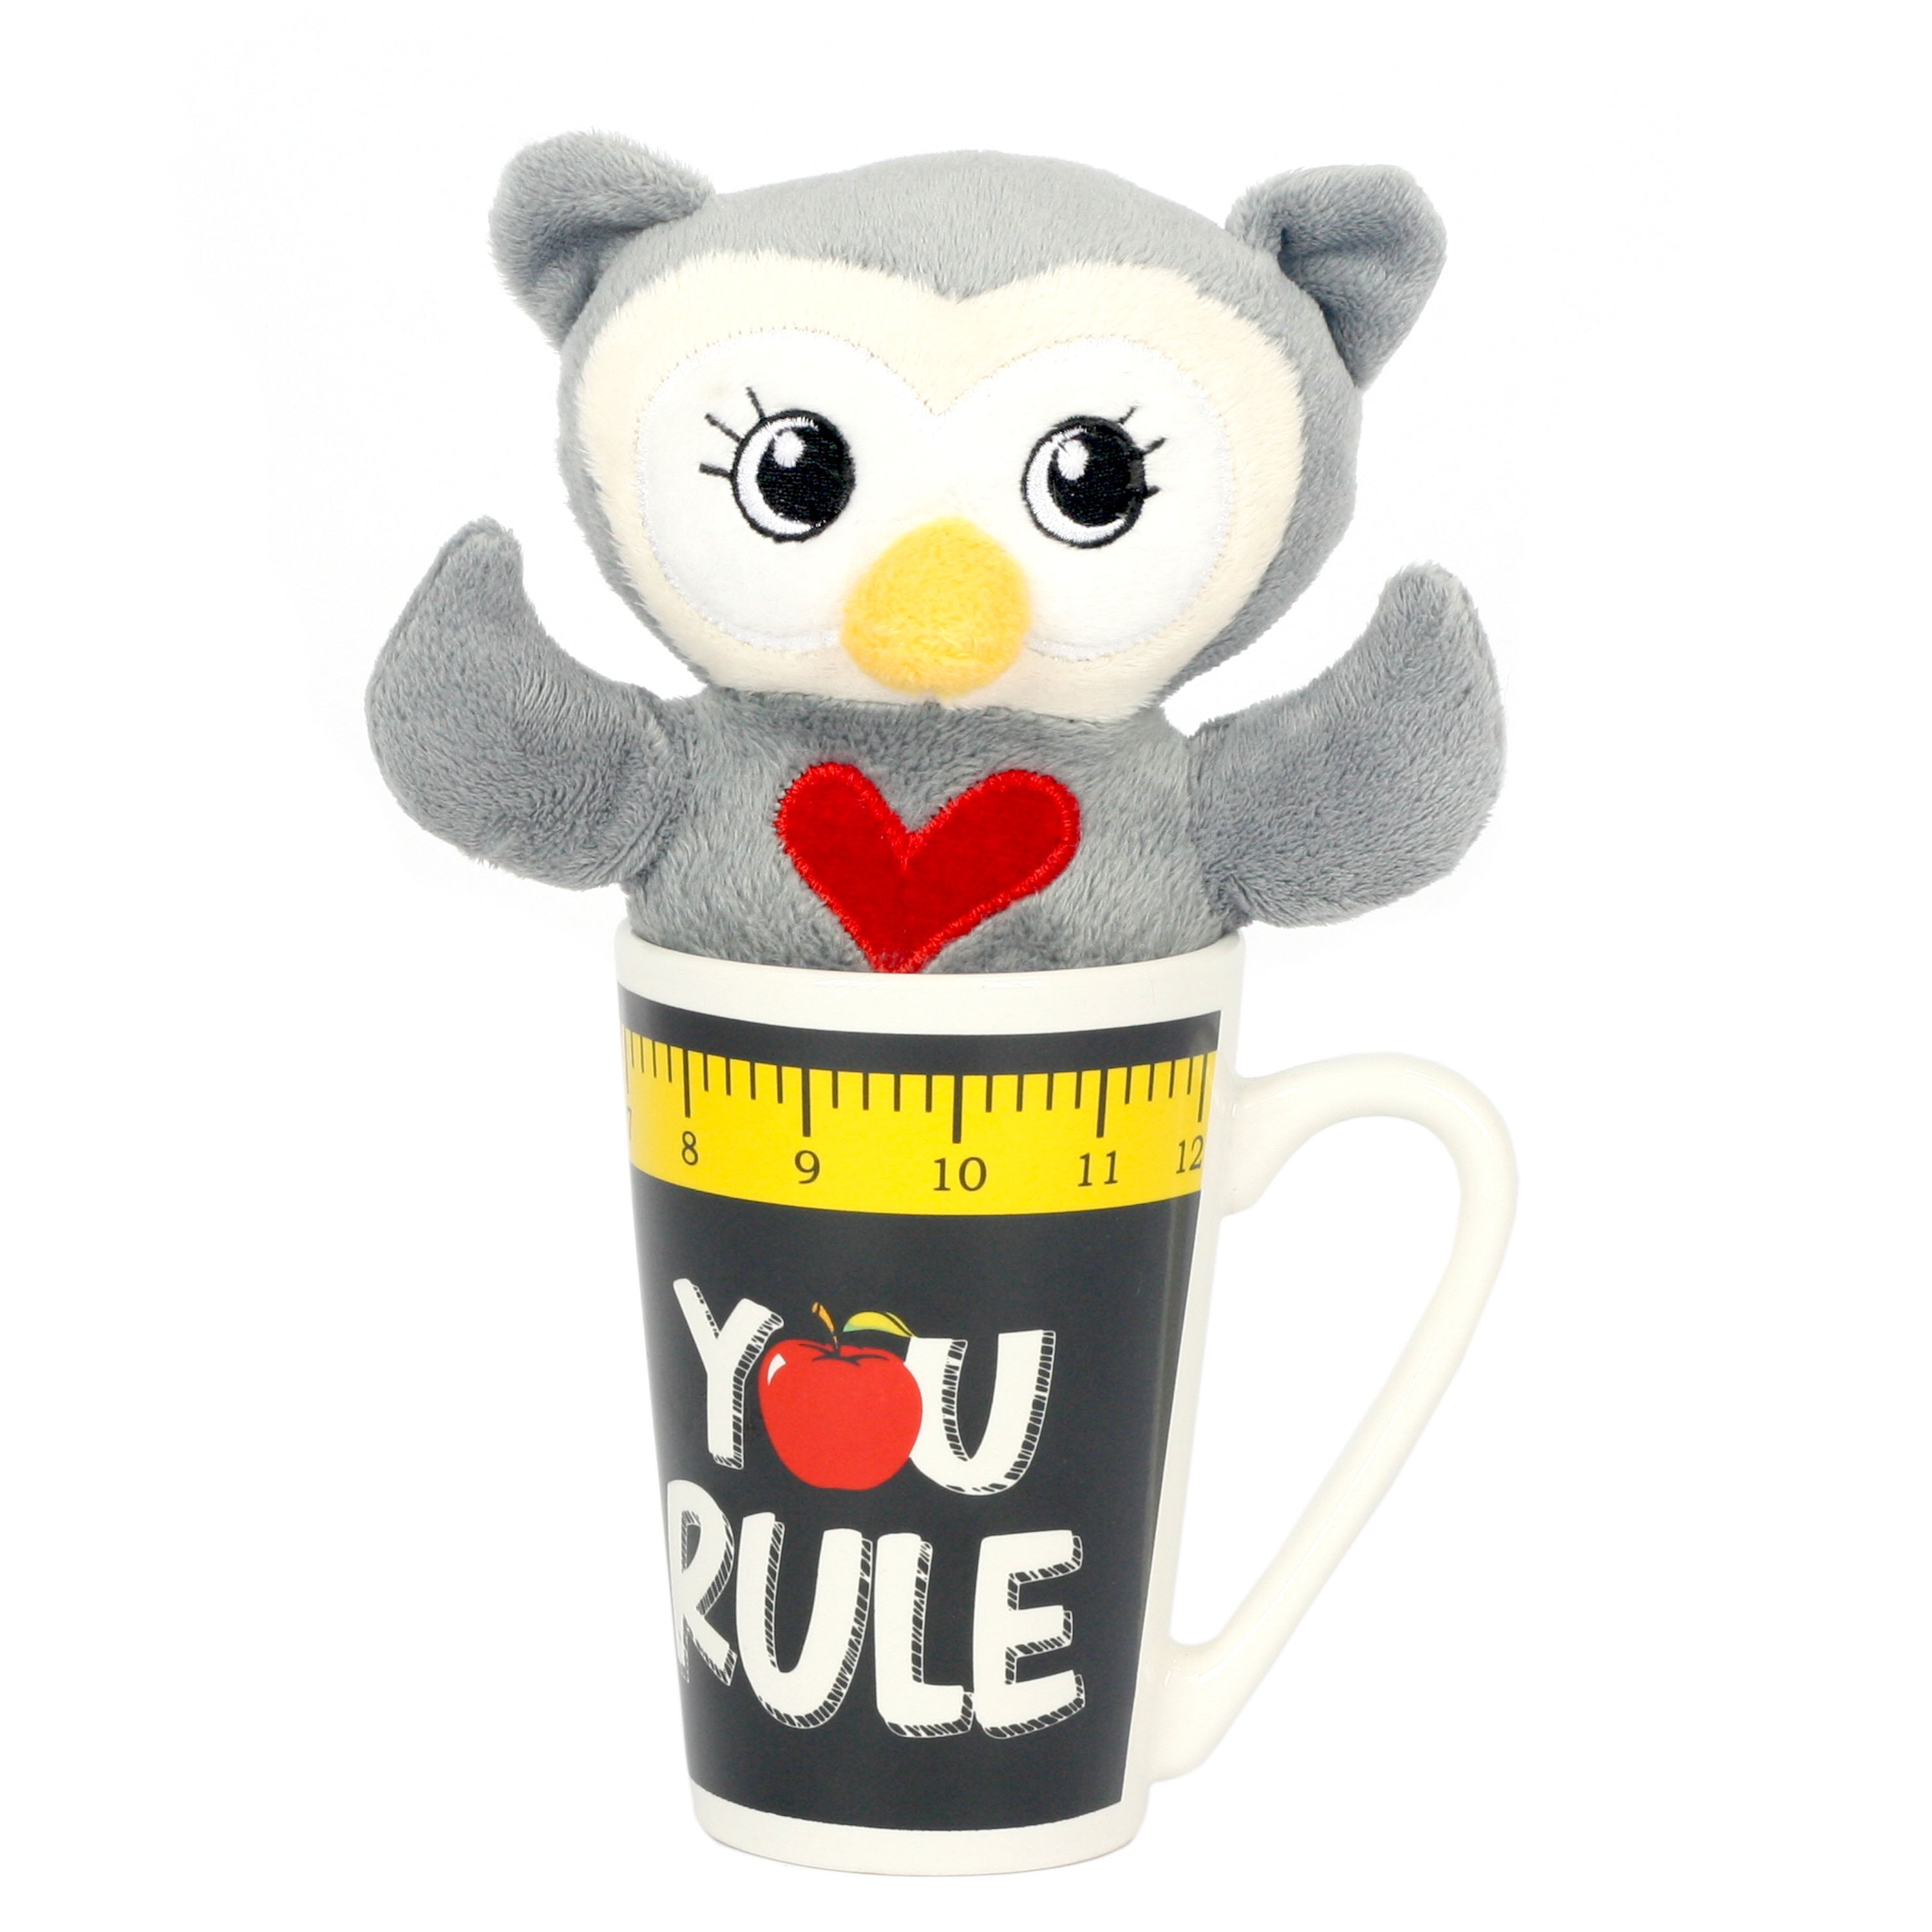 Soft Toy Owl & Mug Set Graduation Gift Brand New 